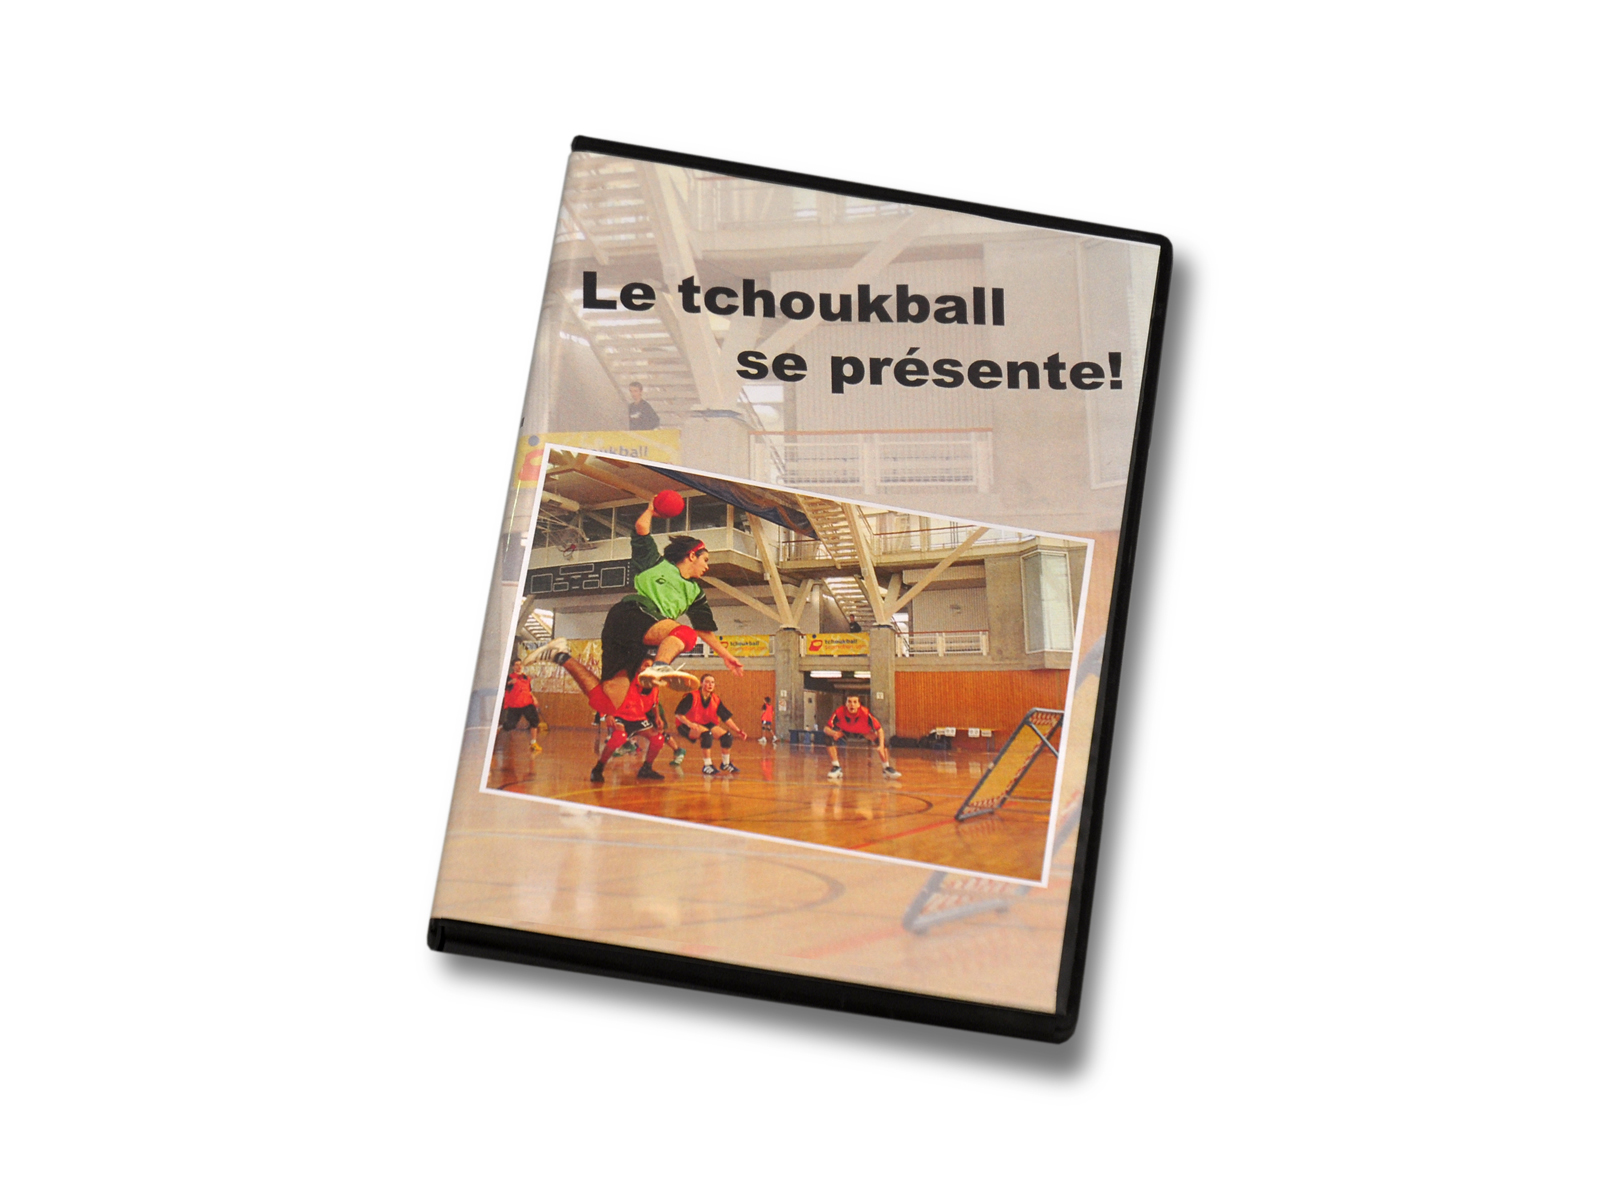 "Presenting tchoukball" video